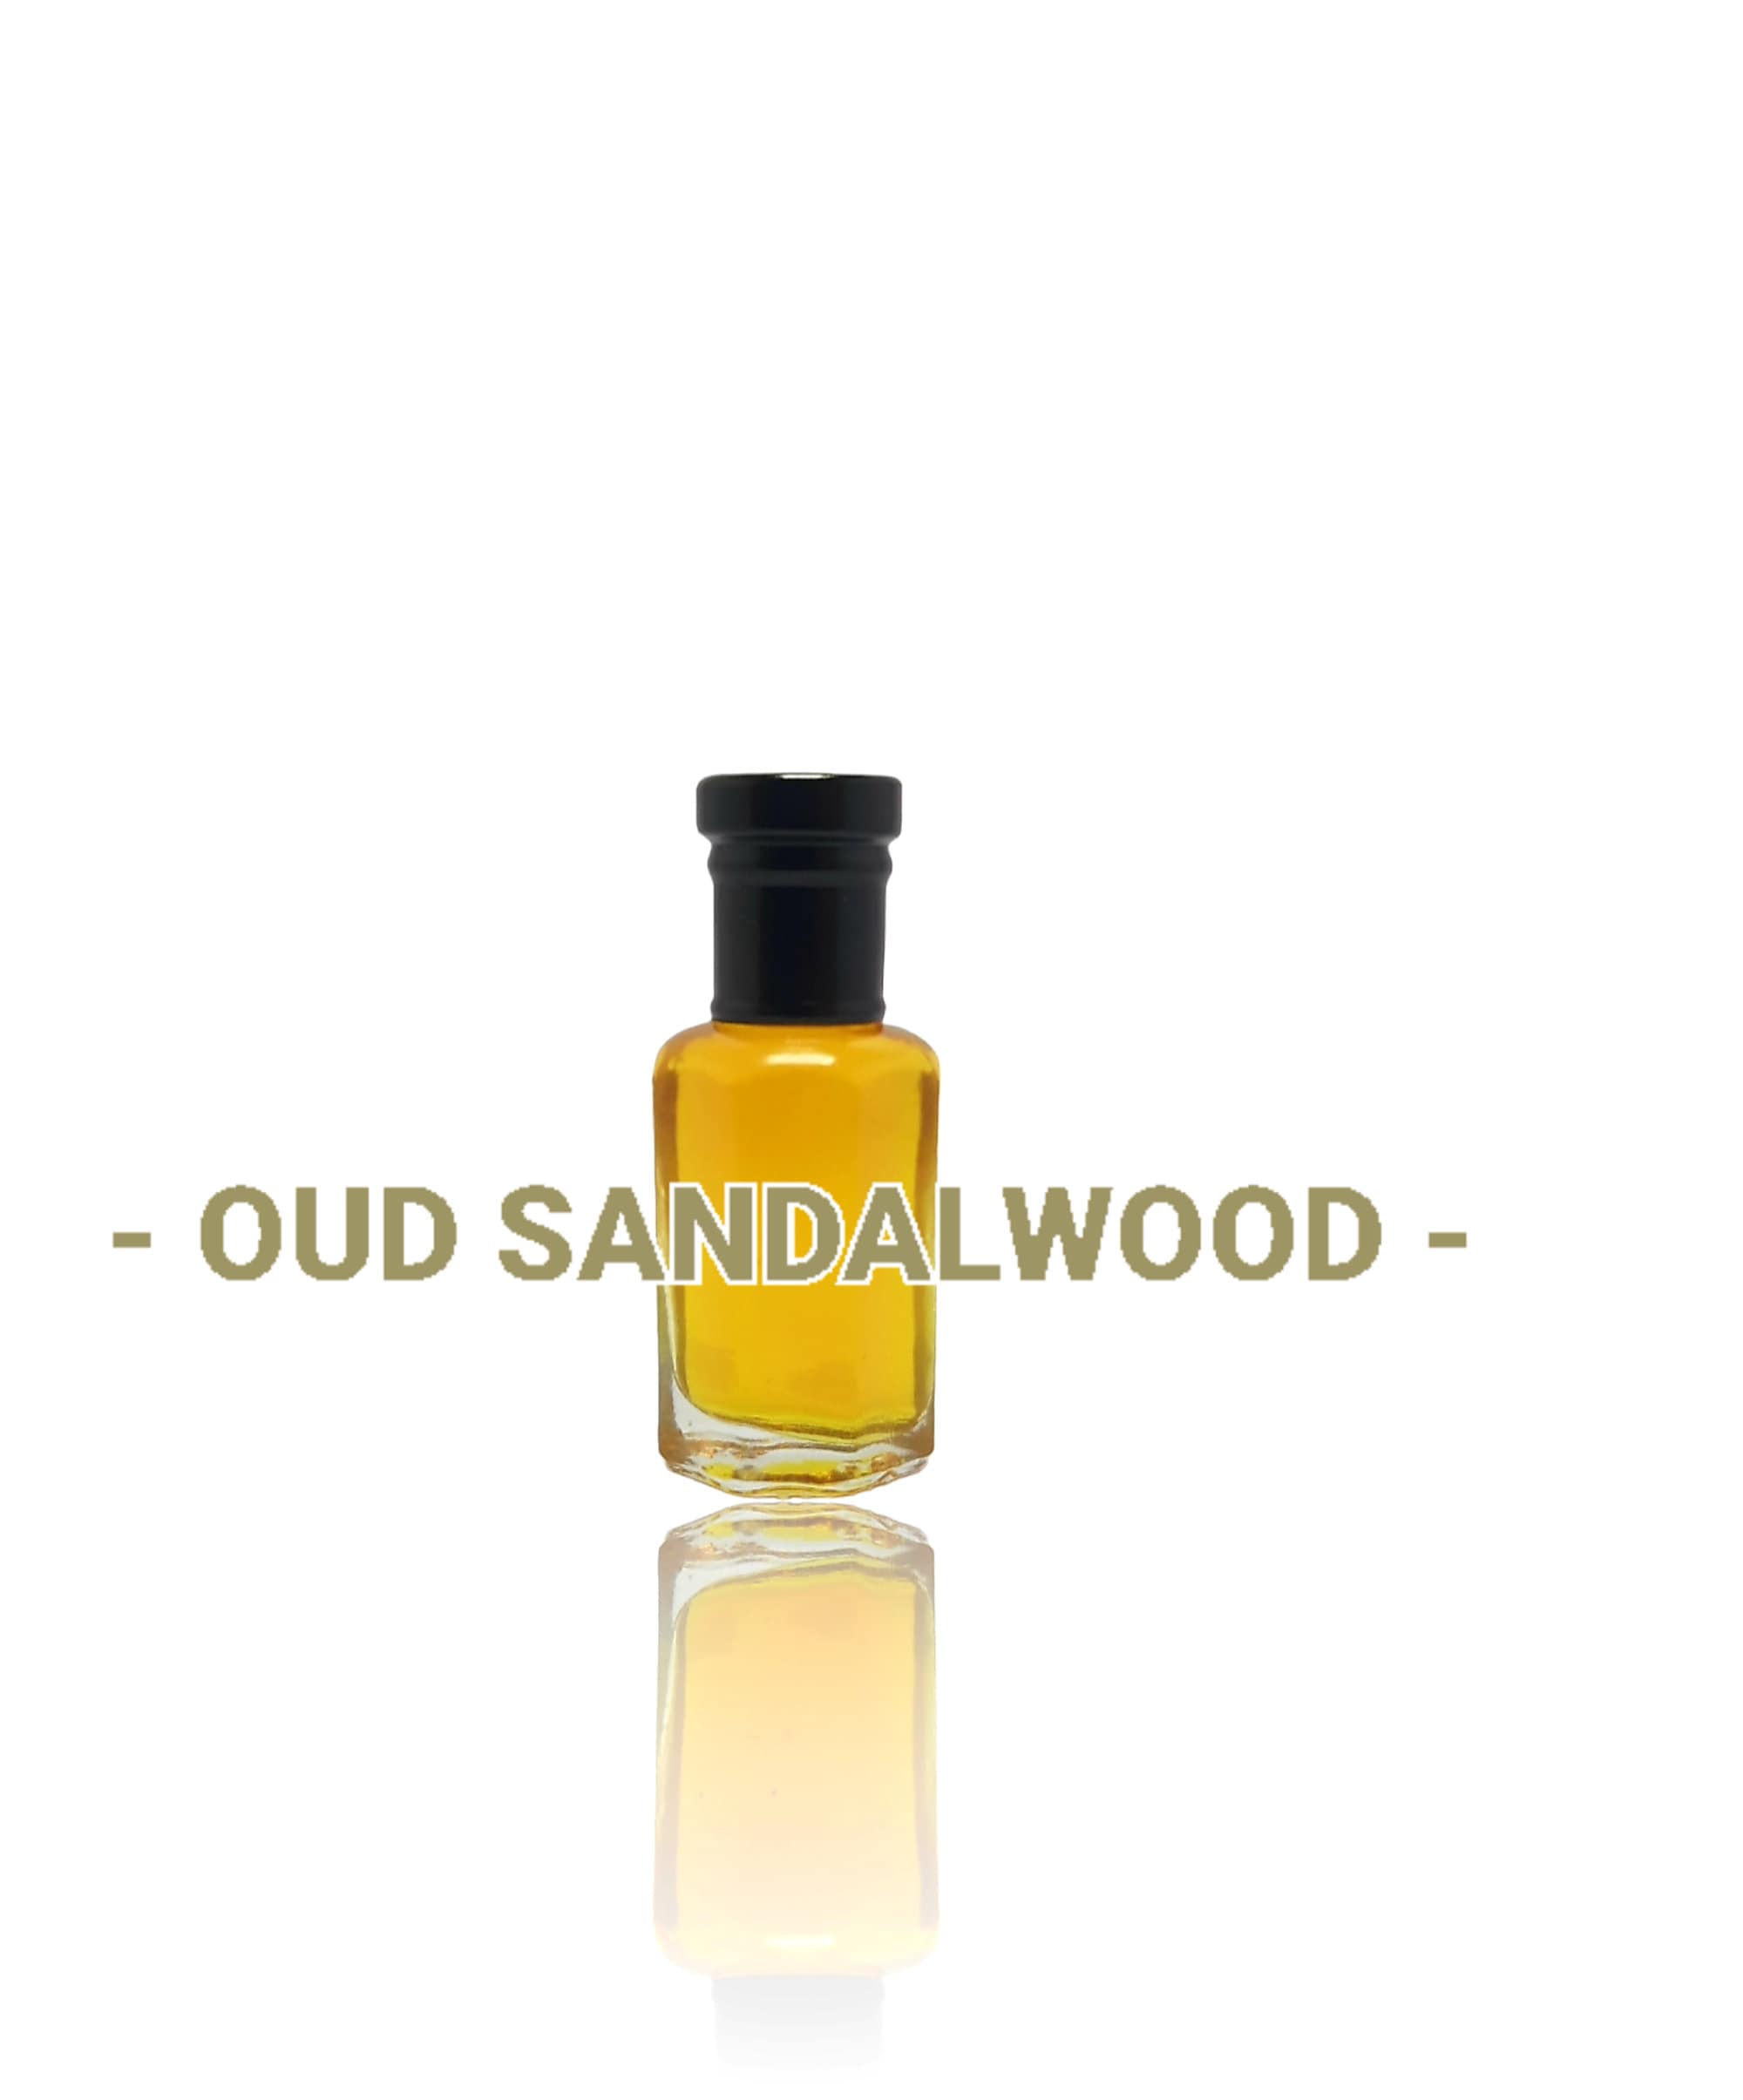 Attar of Oud Essential Oil - Agarwood in Hawaiian Sandalwood (Aquilaria  Crassna/Santalum Paniculatum)